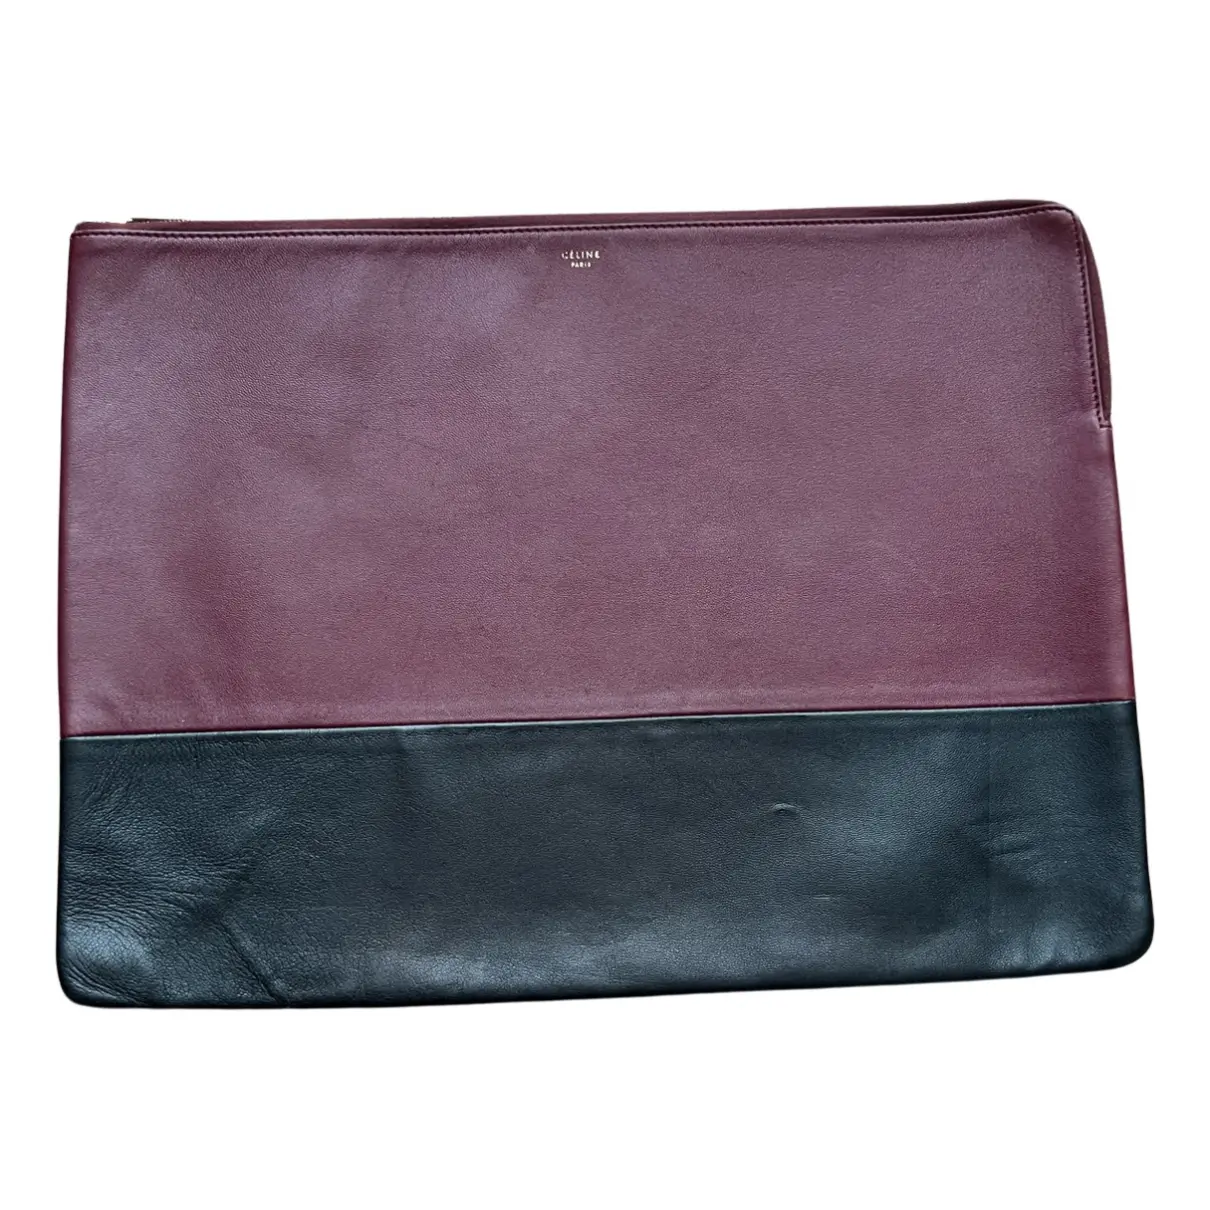 Cabas leather clutch bag